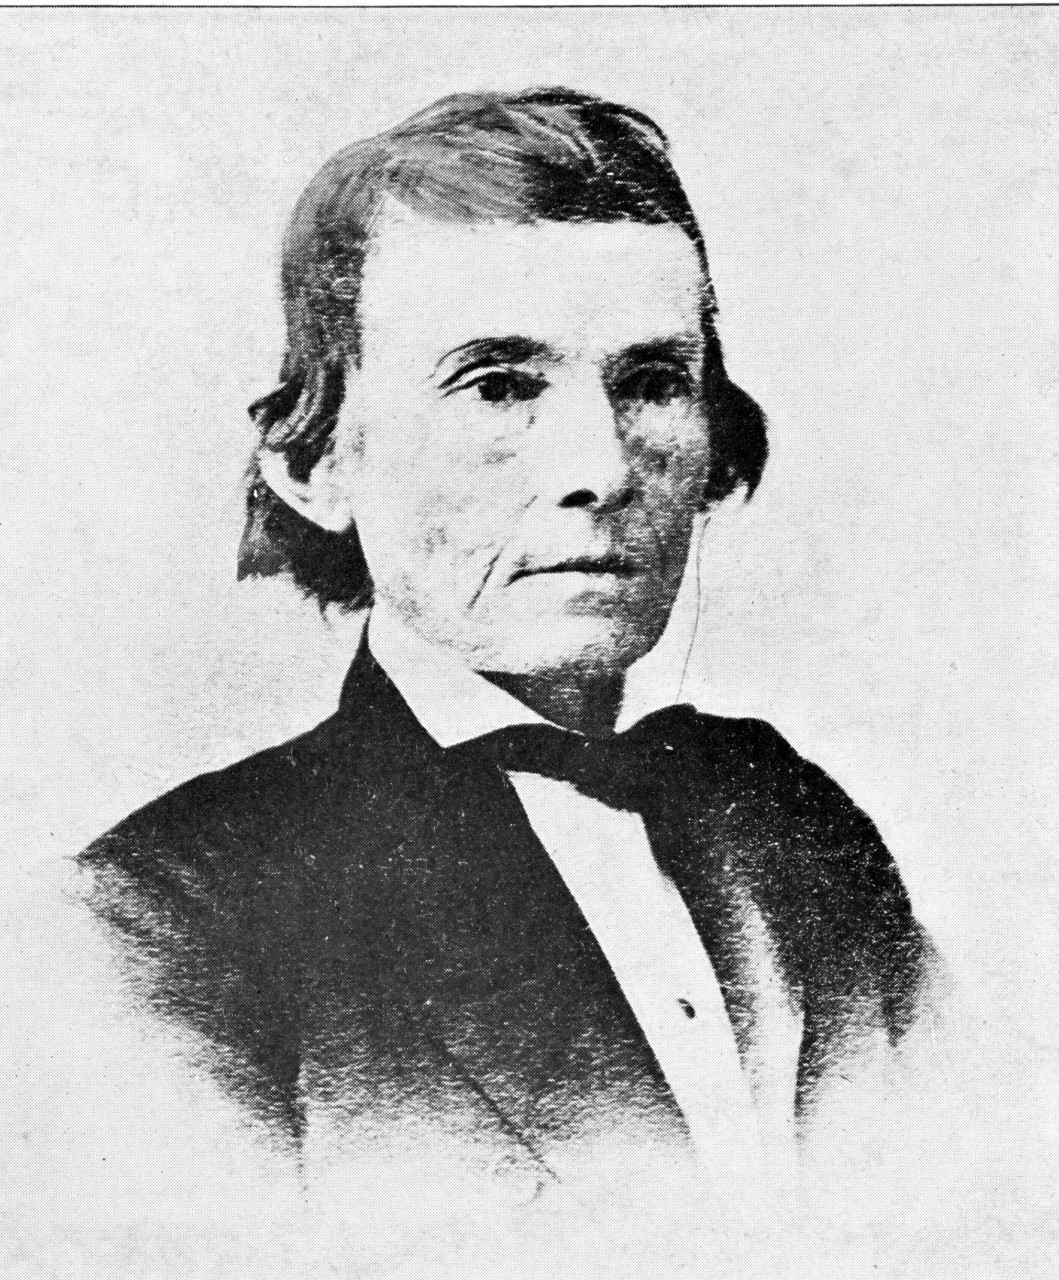 NH 44333 Confederate States Vice President Alexander Hamilton Stephens